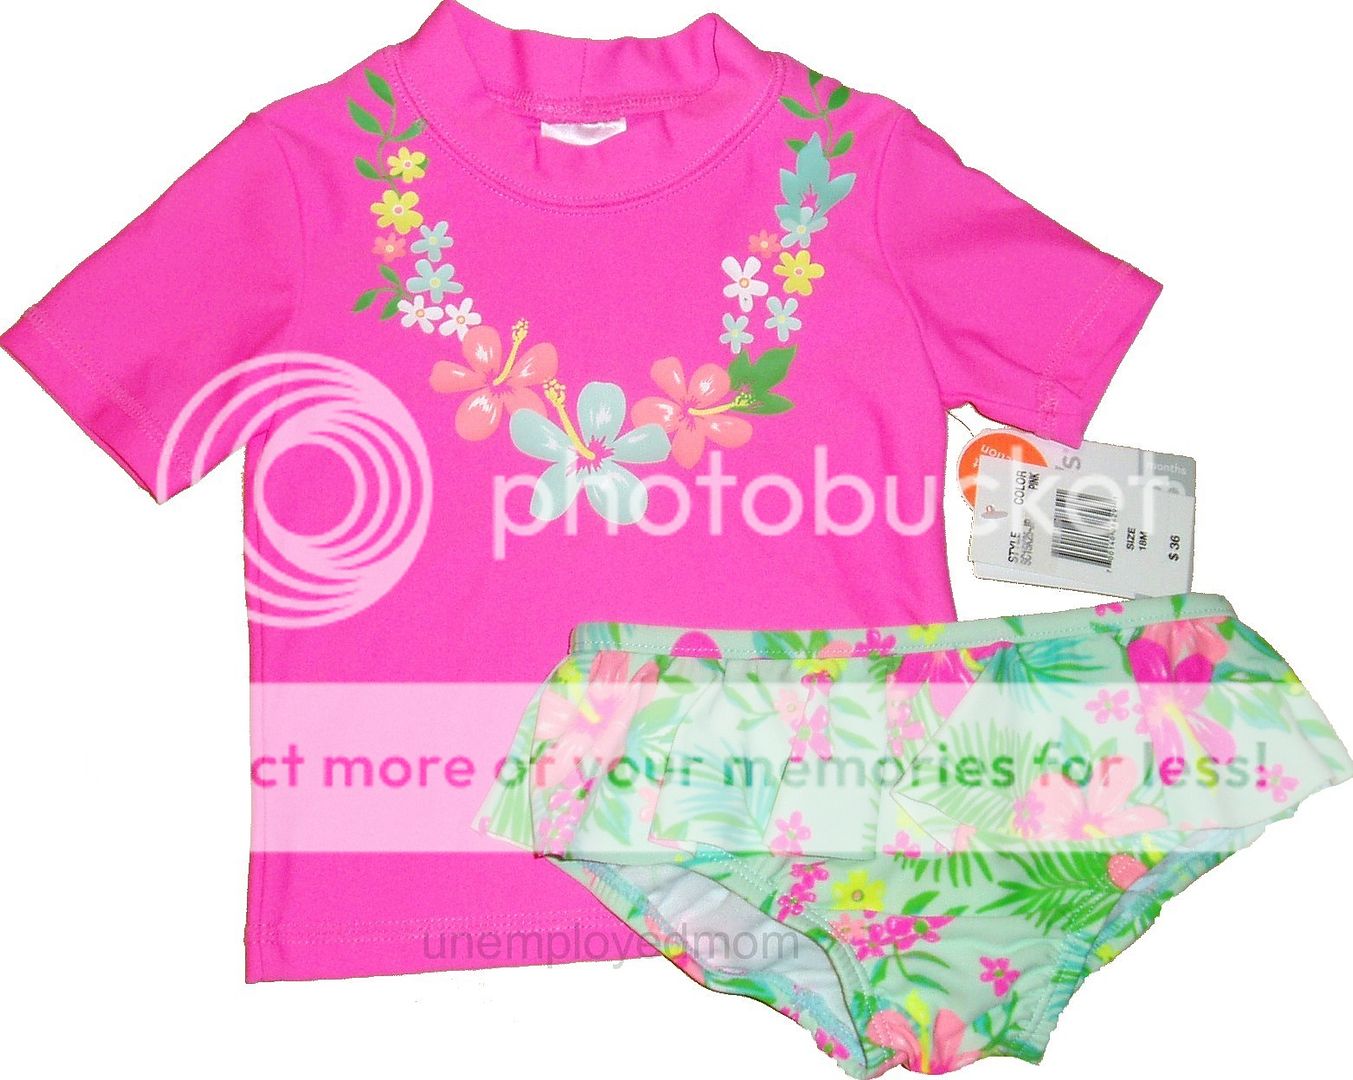  photo 1 Swimsuit Carters Pink Floral Lei Rashguard set 1.jpg